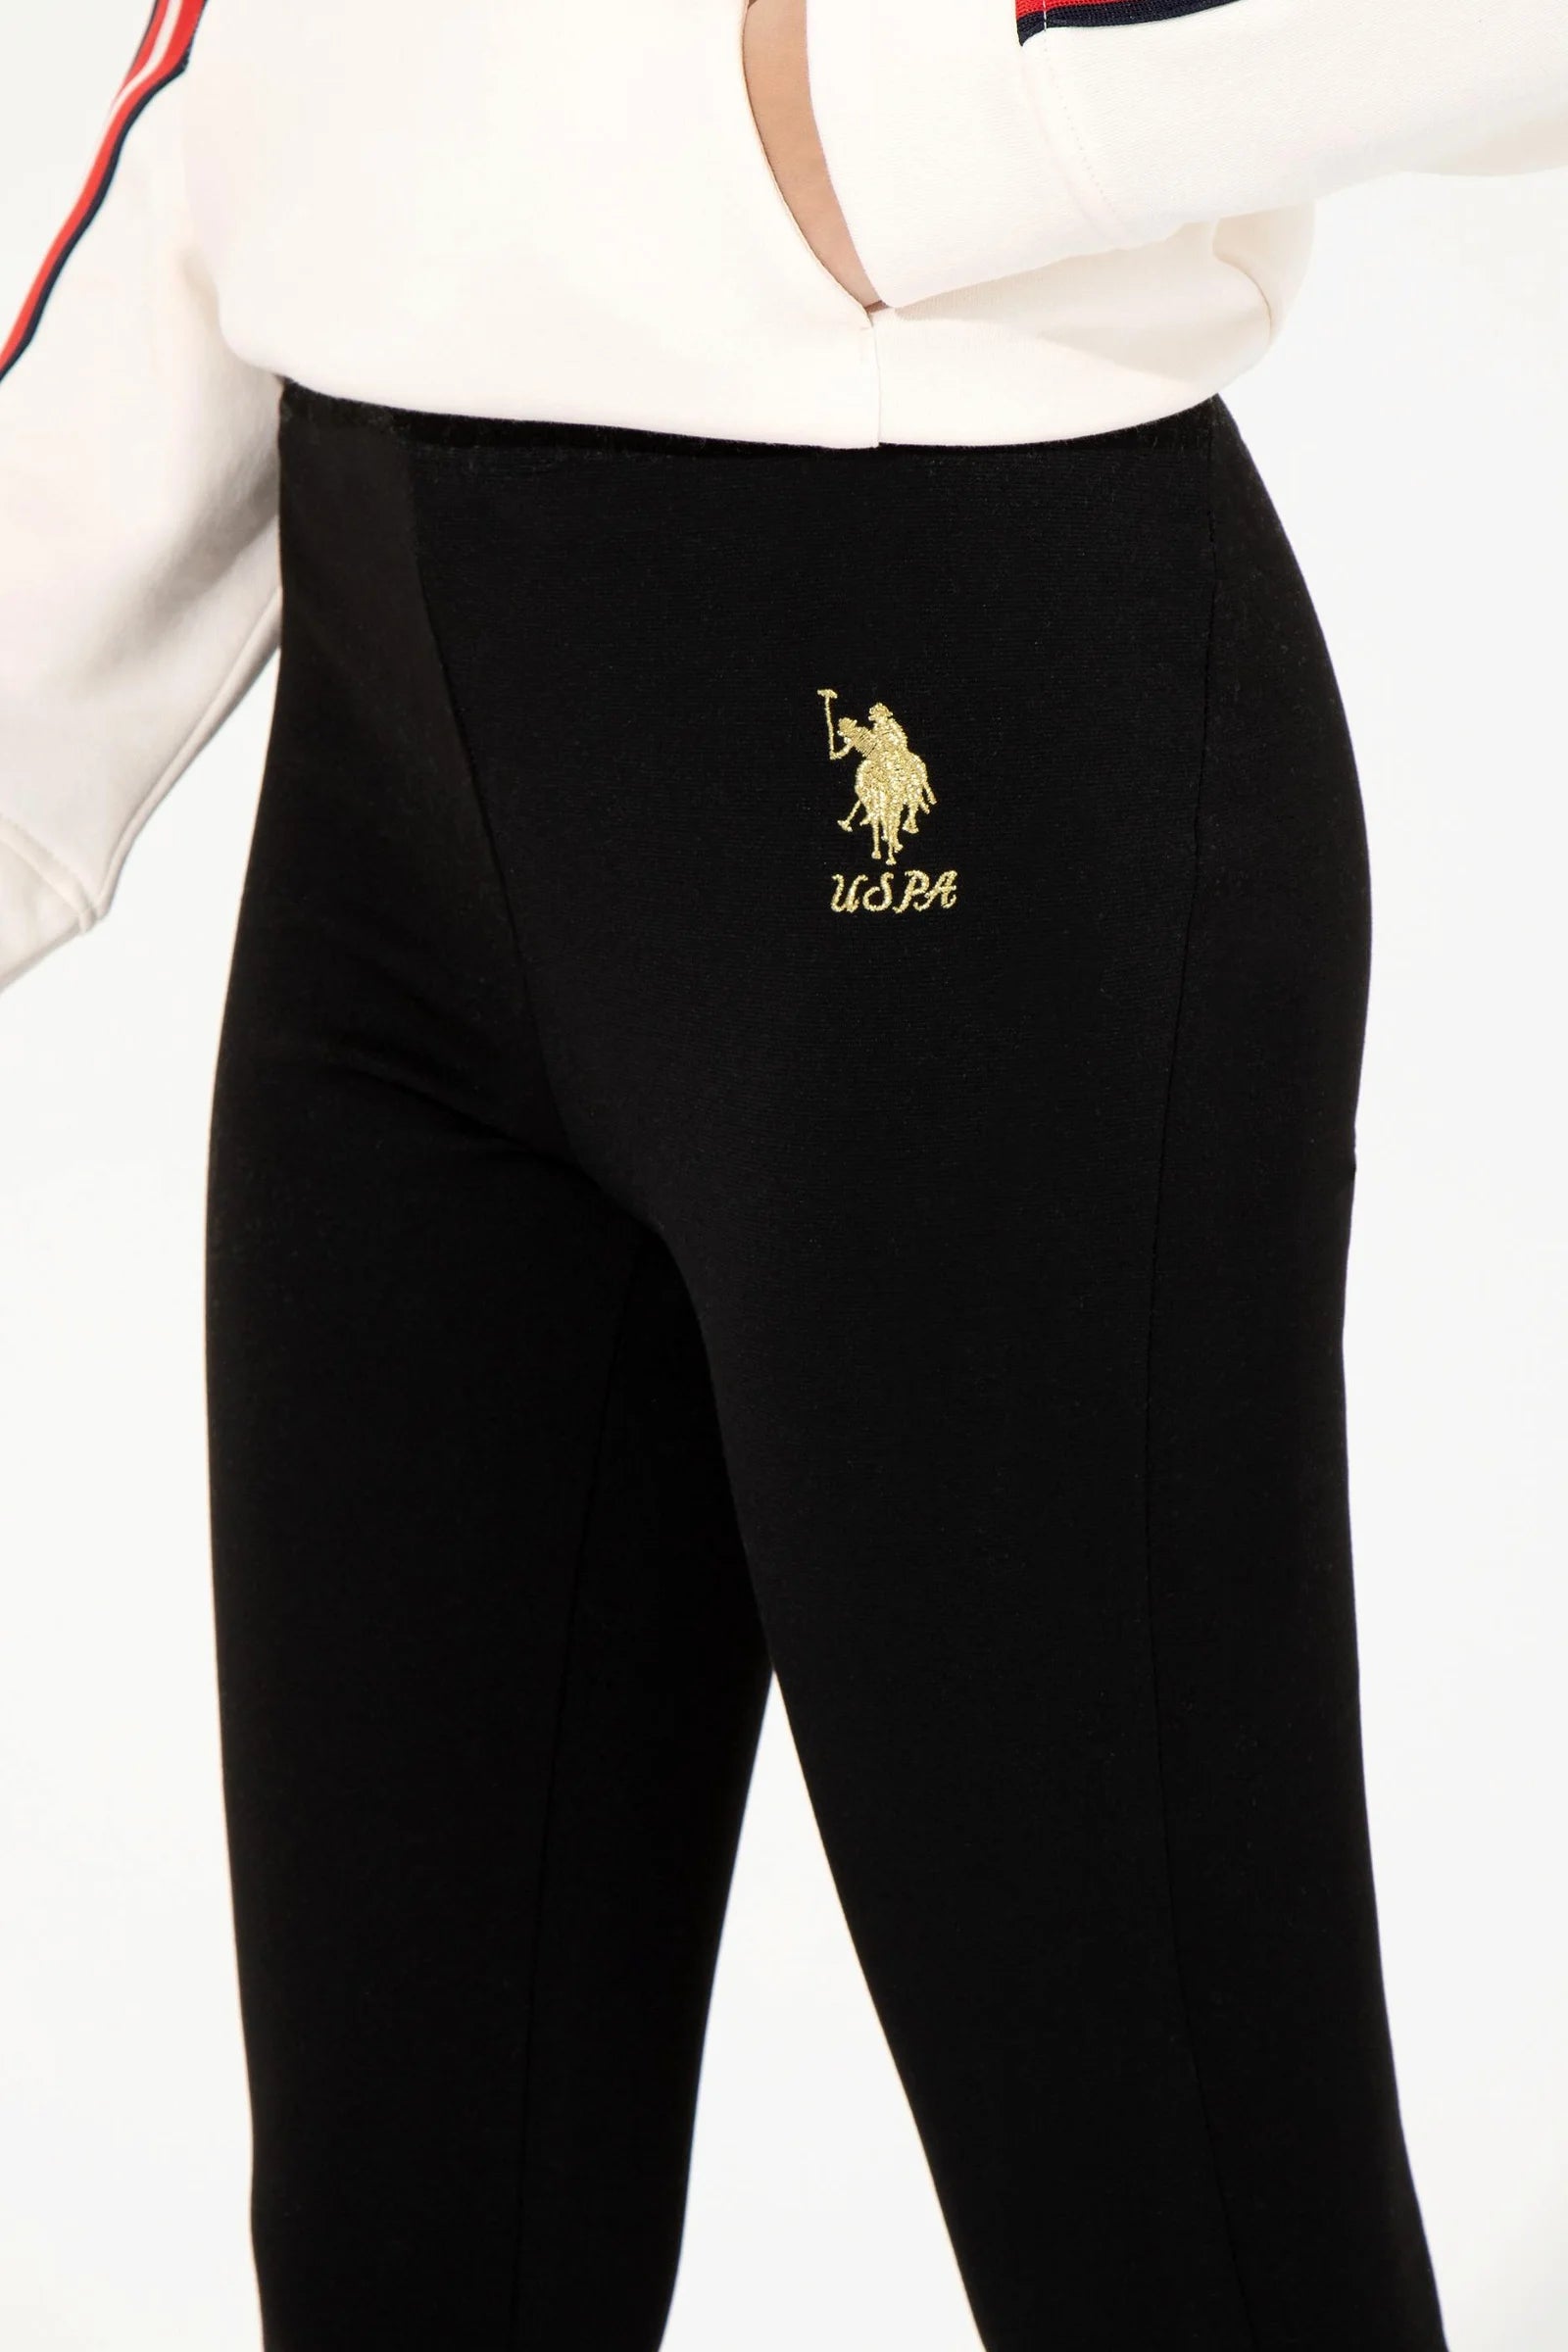 US Polo Assn. Tight Fit Legging with USPA Logo - Women